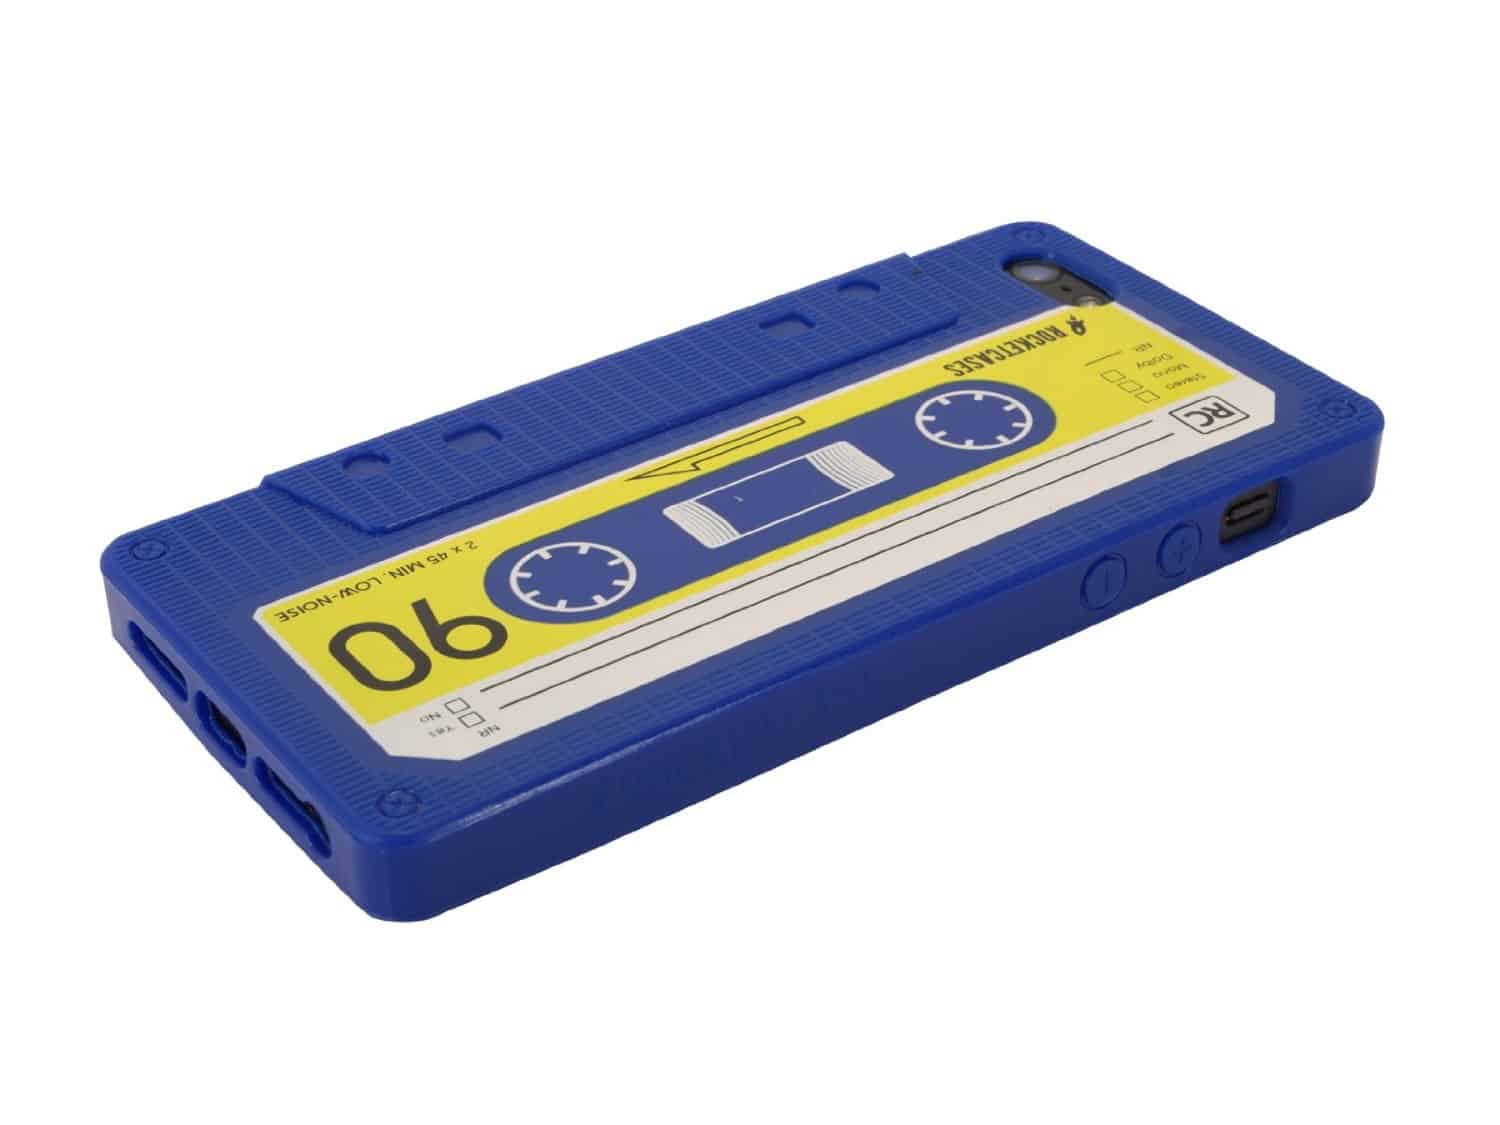 iPhone Cassette Case by Rocketcases Blue Retro Design